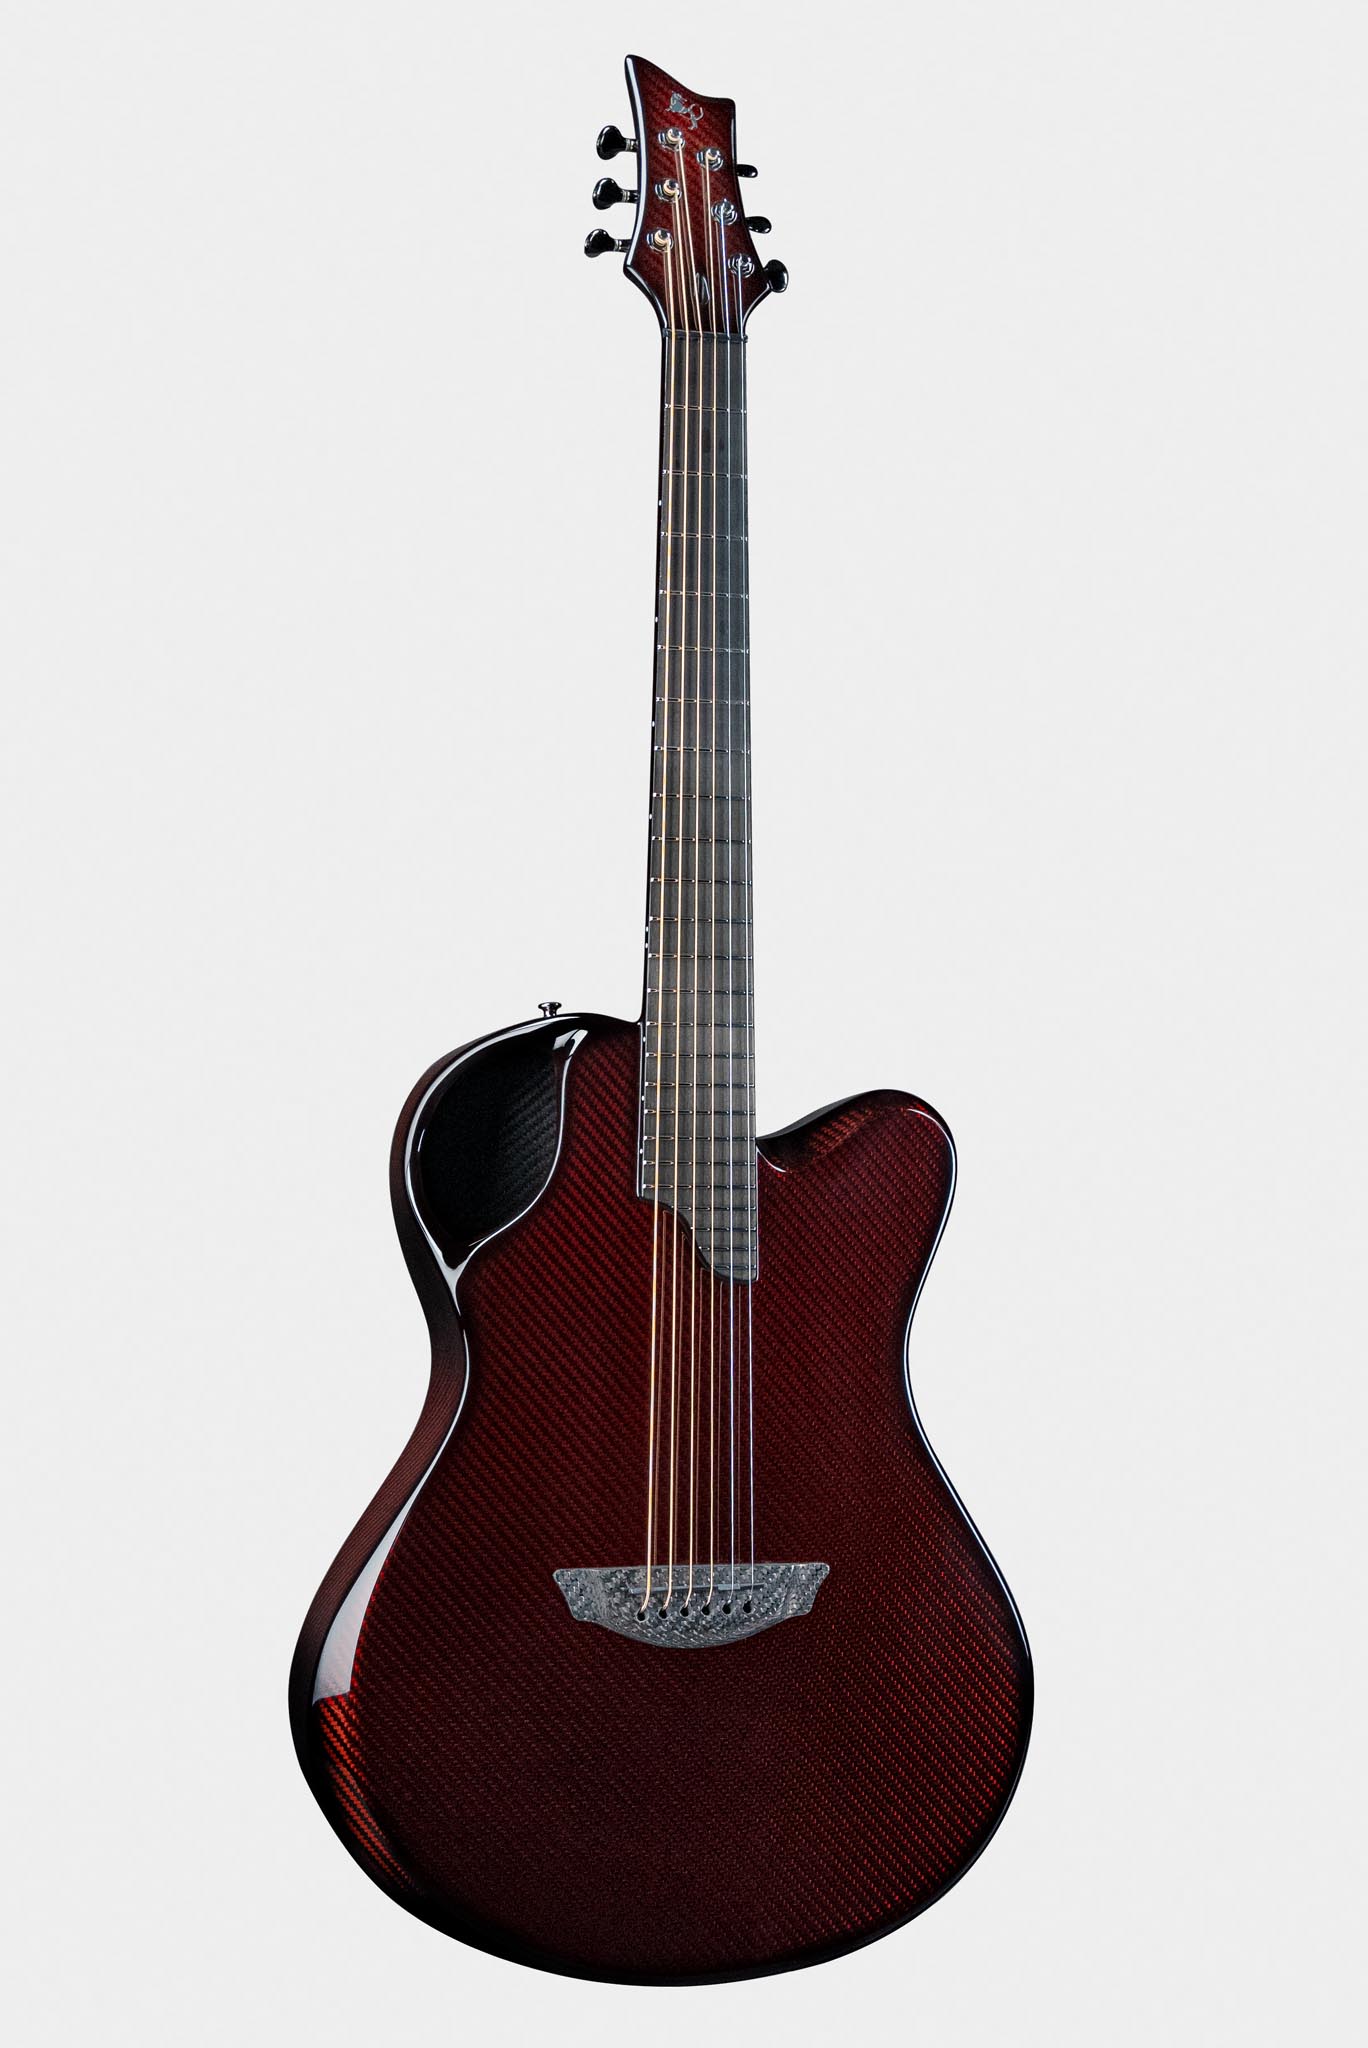 Emerald Guitars X20 carbon fiber guitar in radiant red